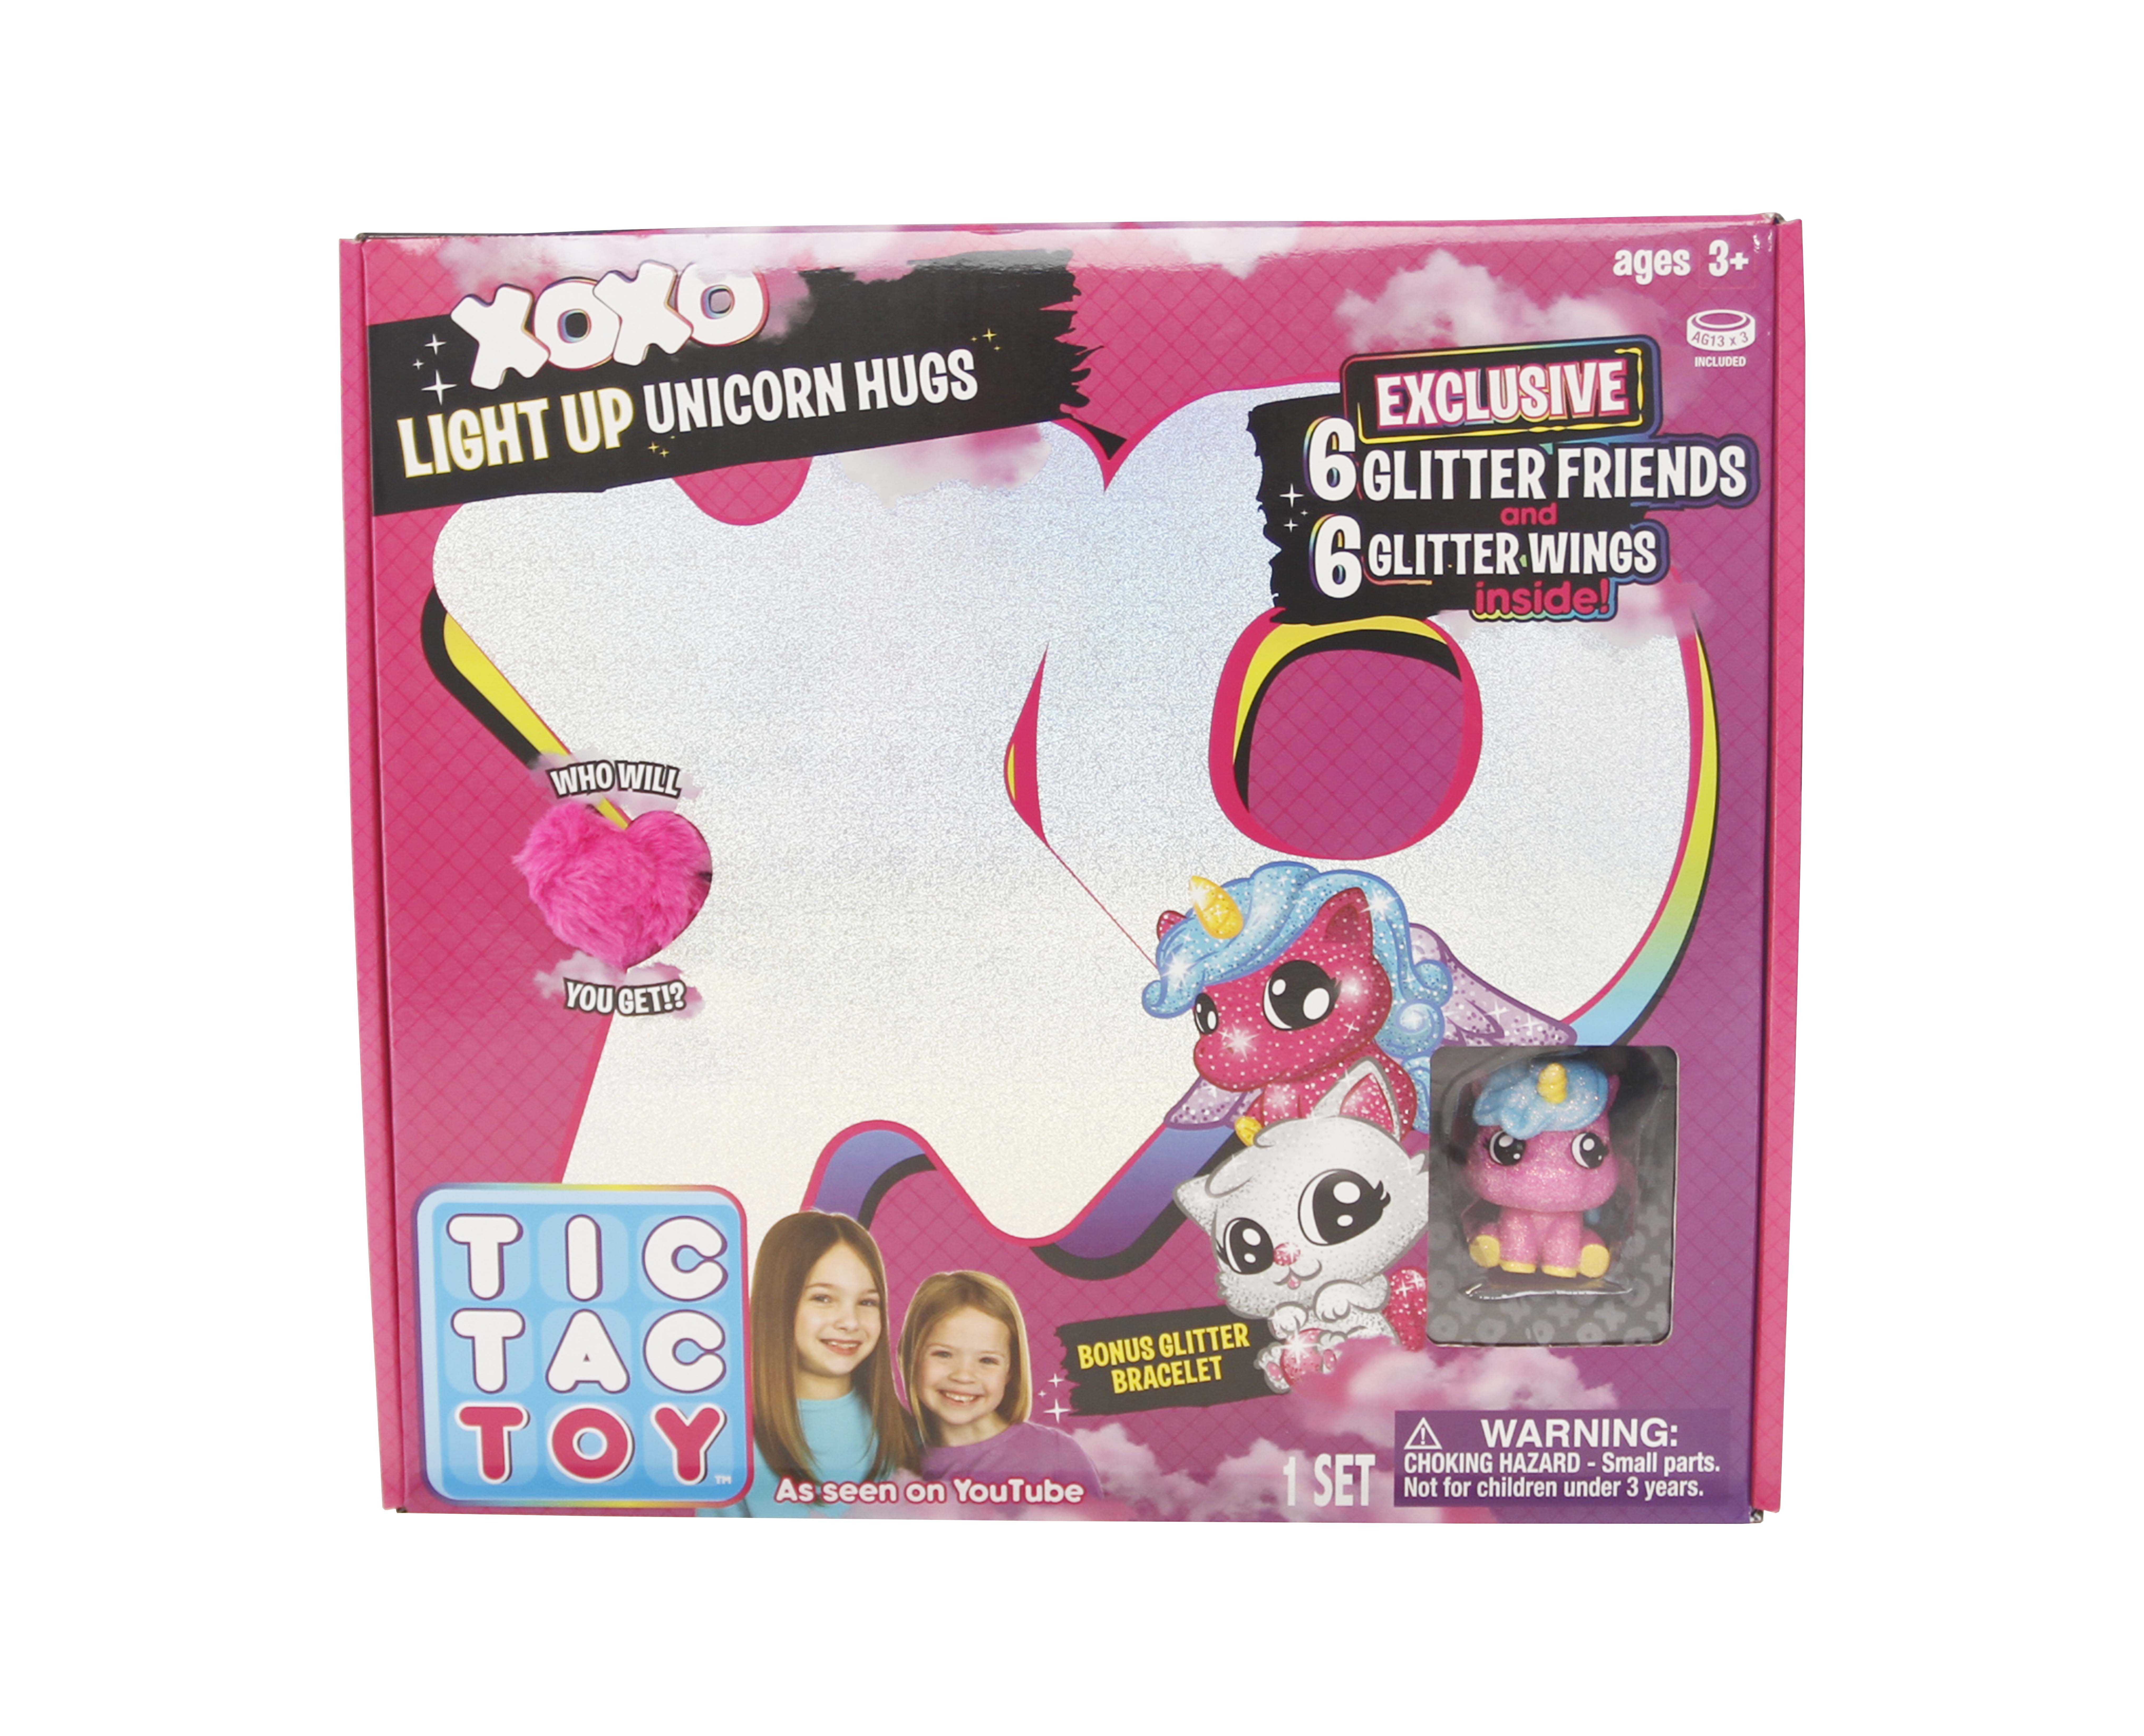 Tic Tac Toy XOXO Light Up Pink Unicorn Hugs & Glitter Friends - image 1 of 4